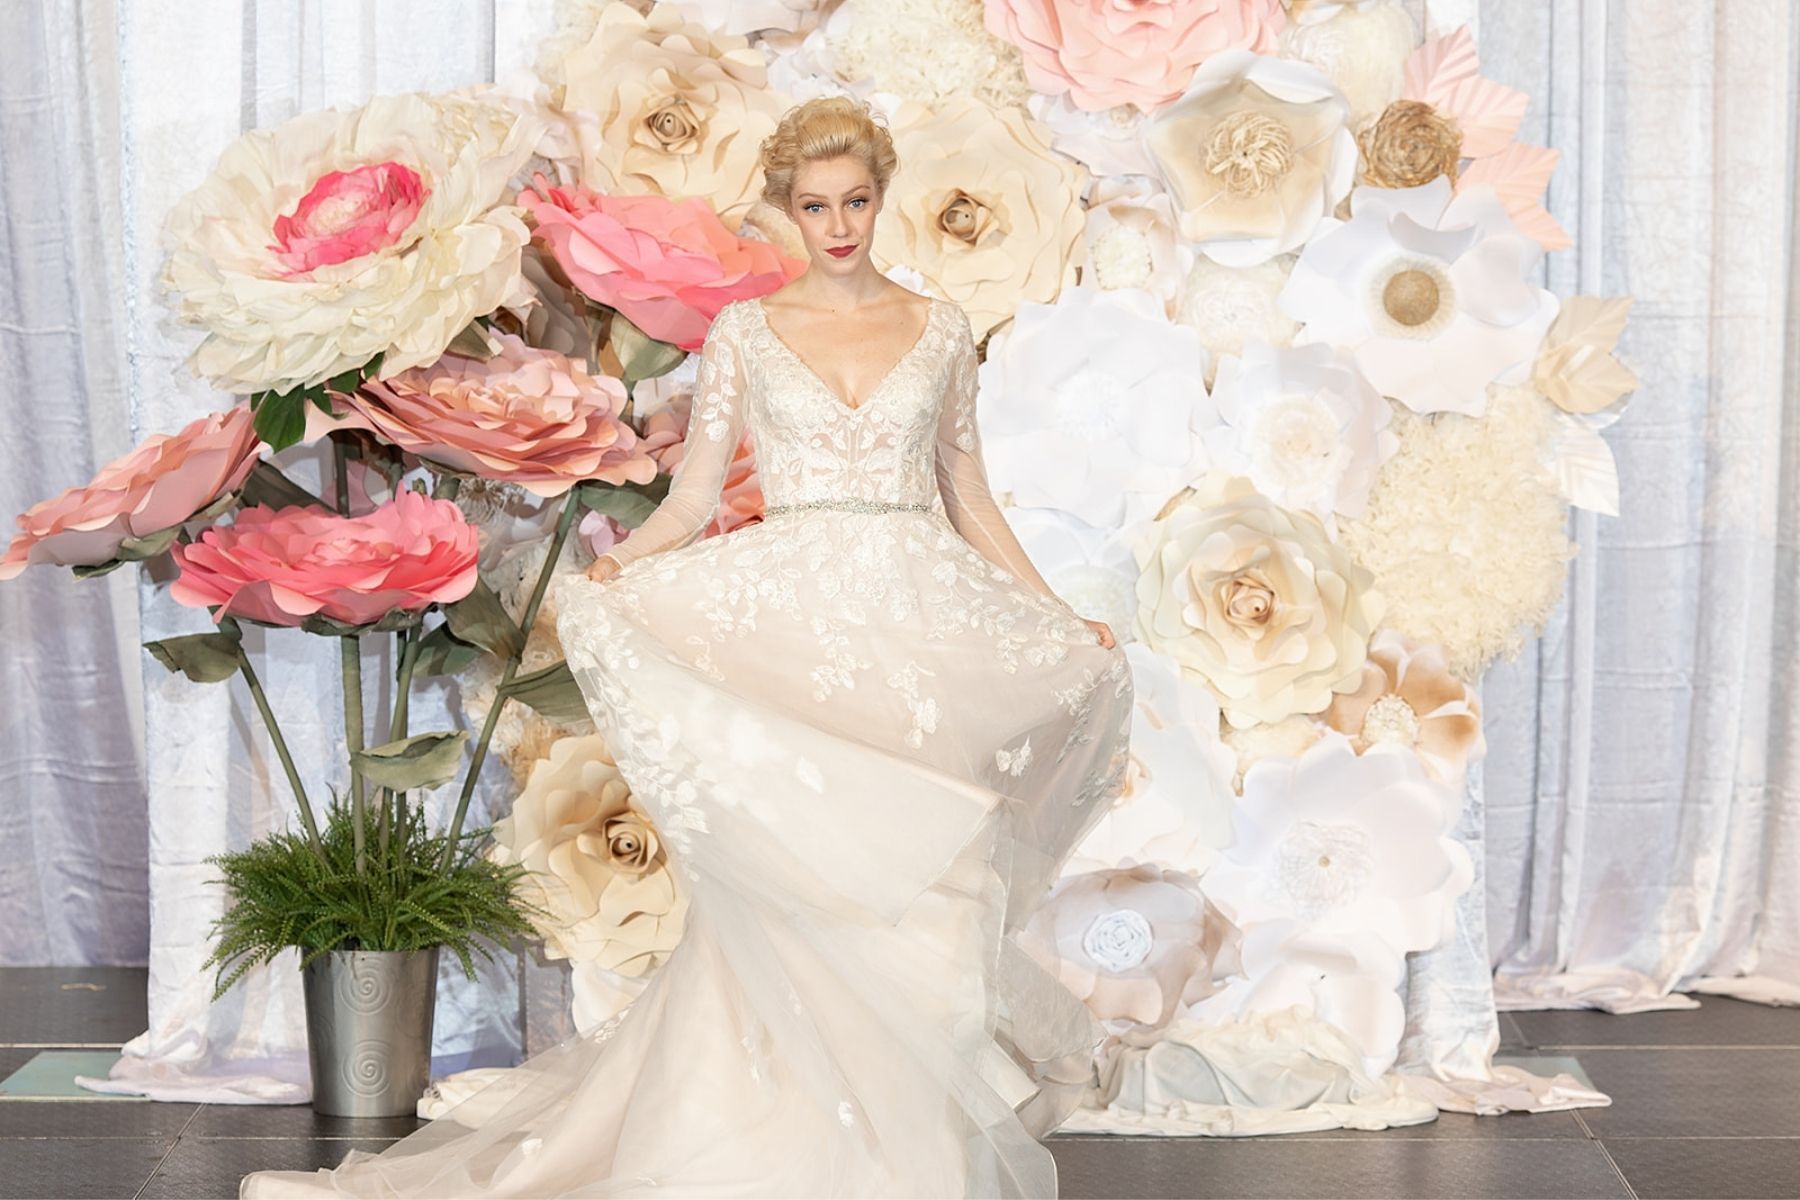 david's bridal gown at modesto international wedding festival, model on runway